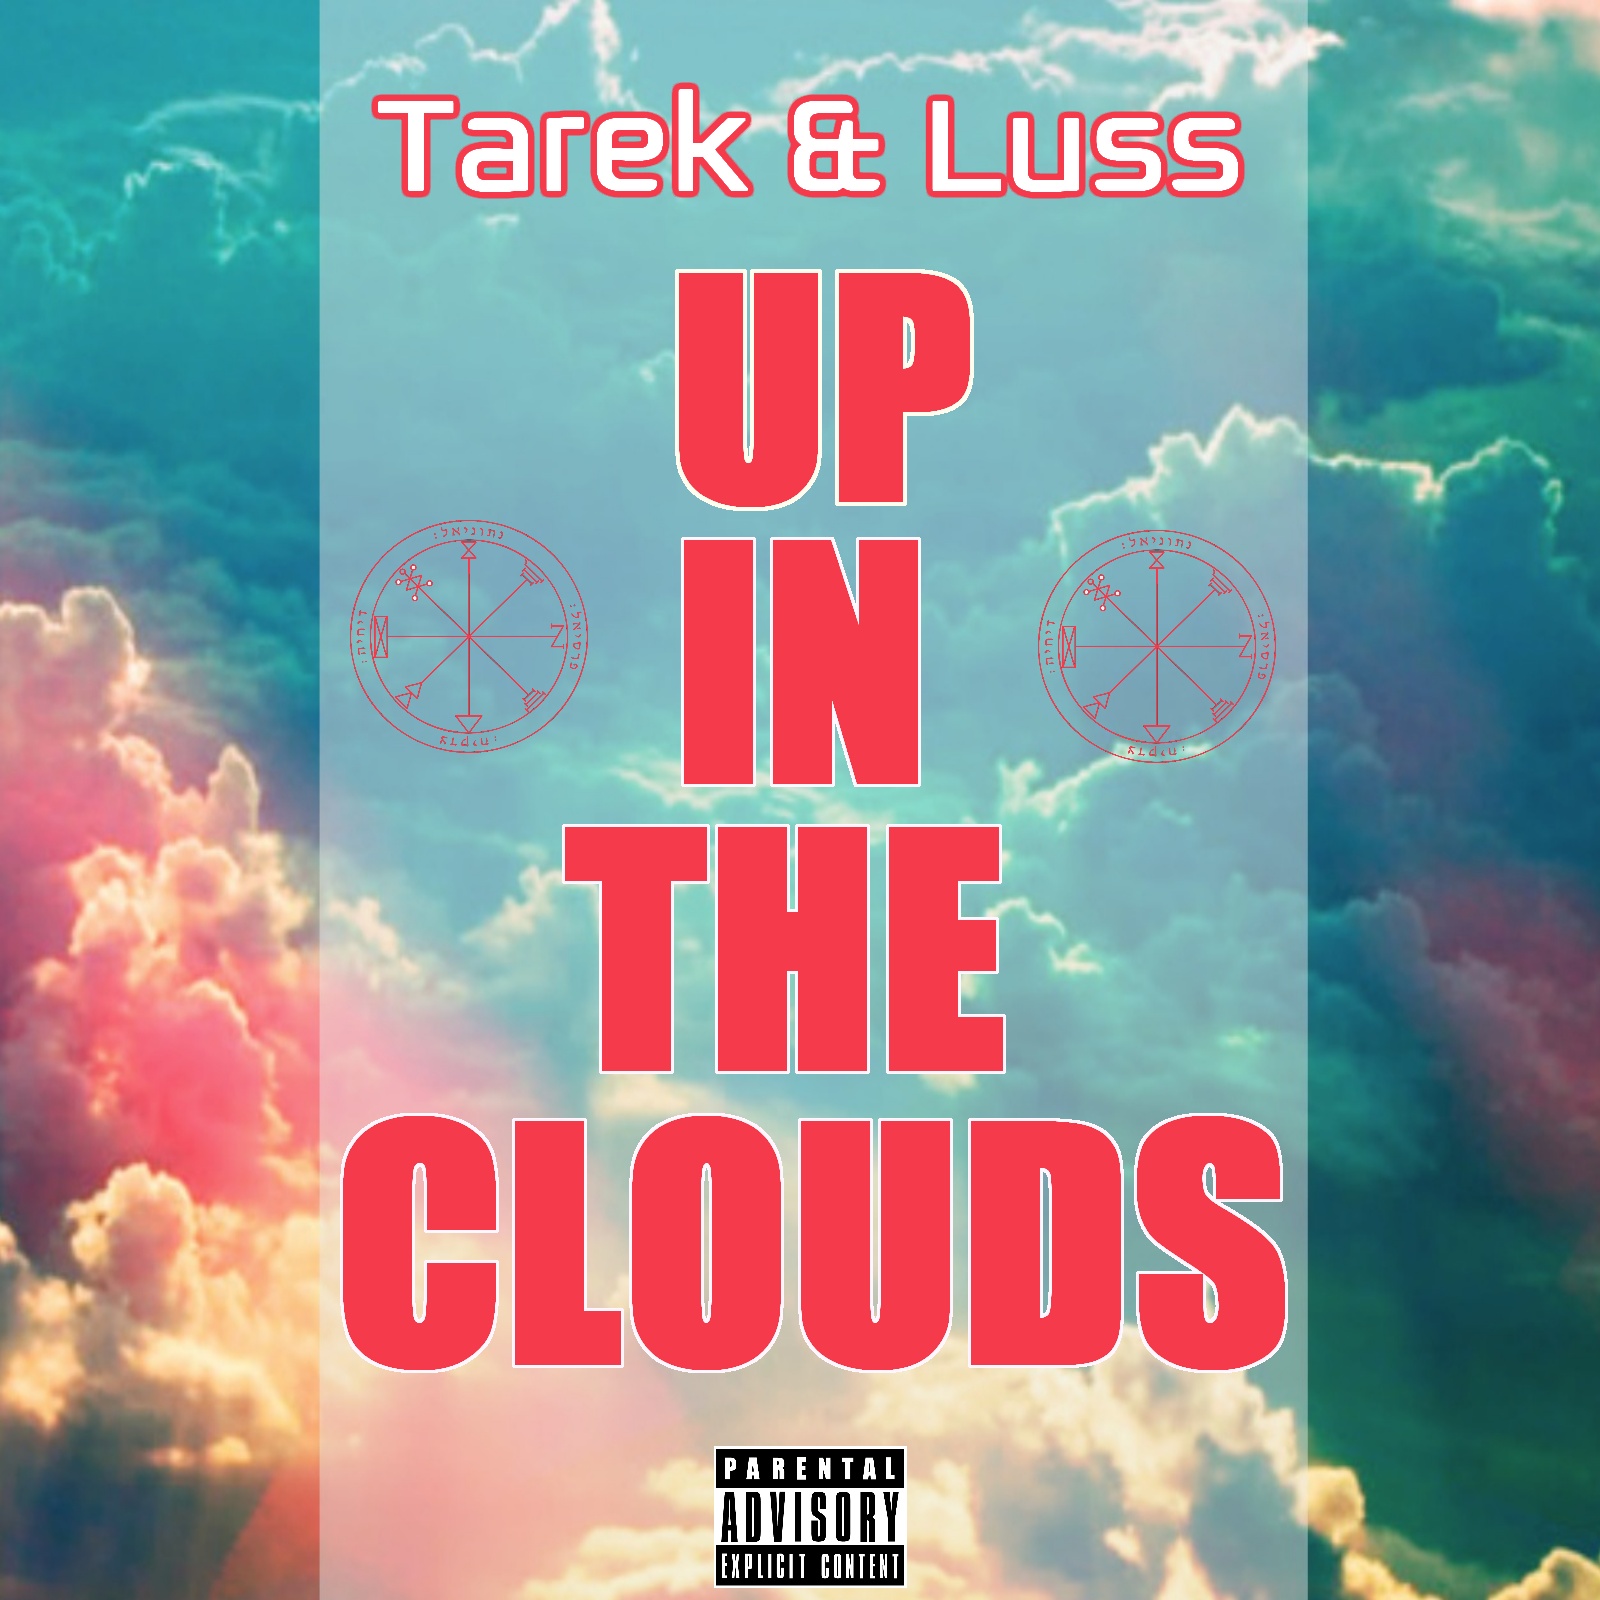 Tarek & Luss "Up In The Clouds" | @tarekluss